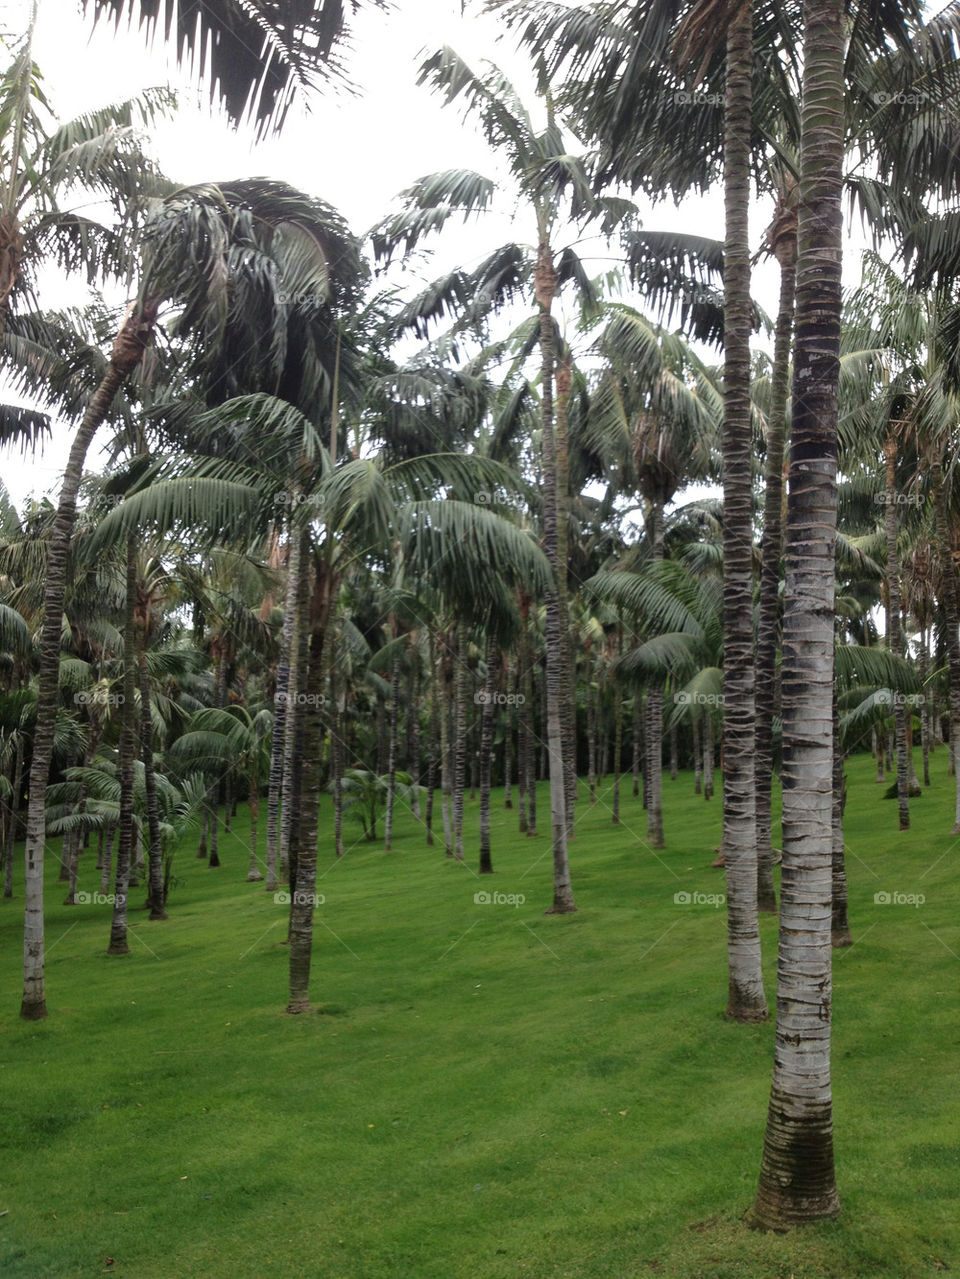 Palm trees in garden